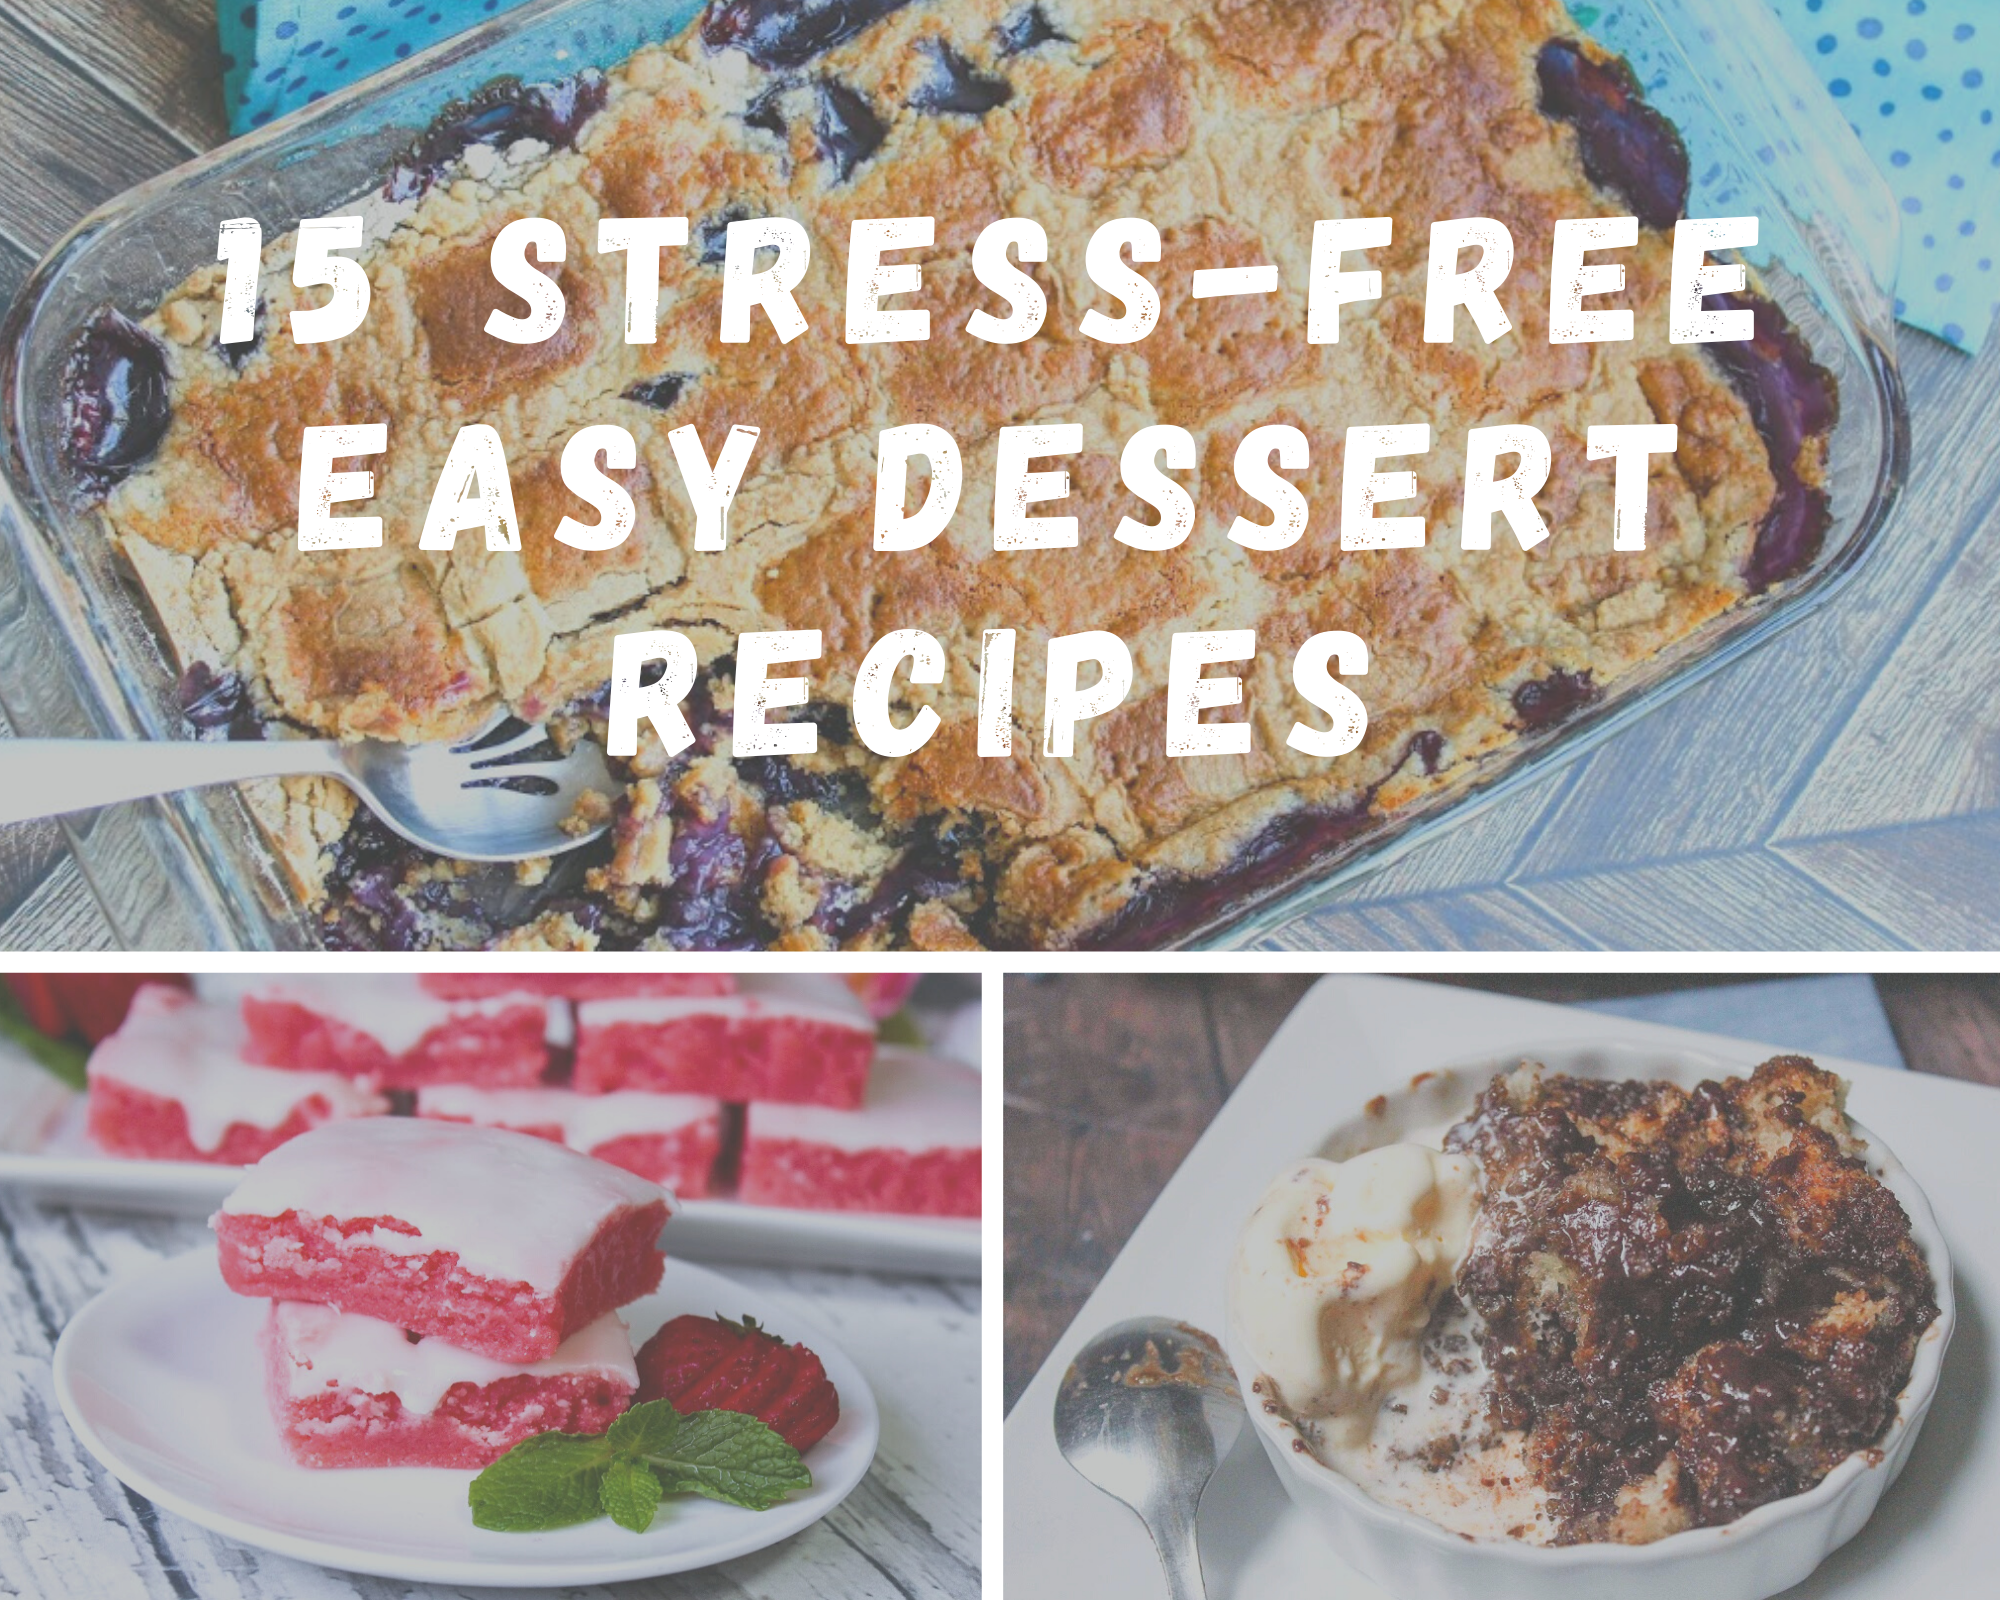 15 stress-free desserts